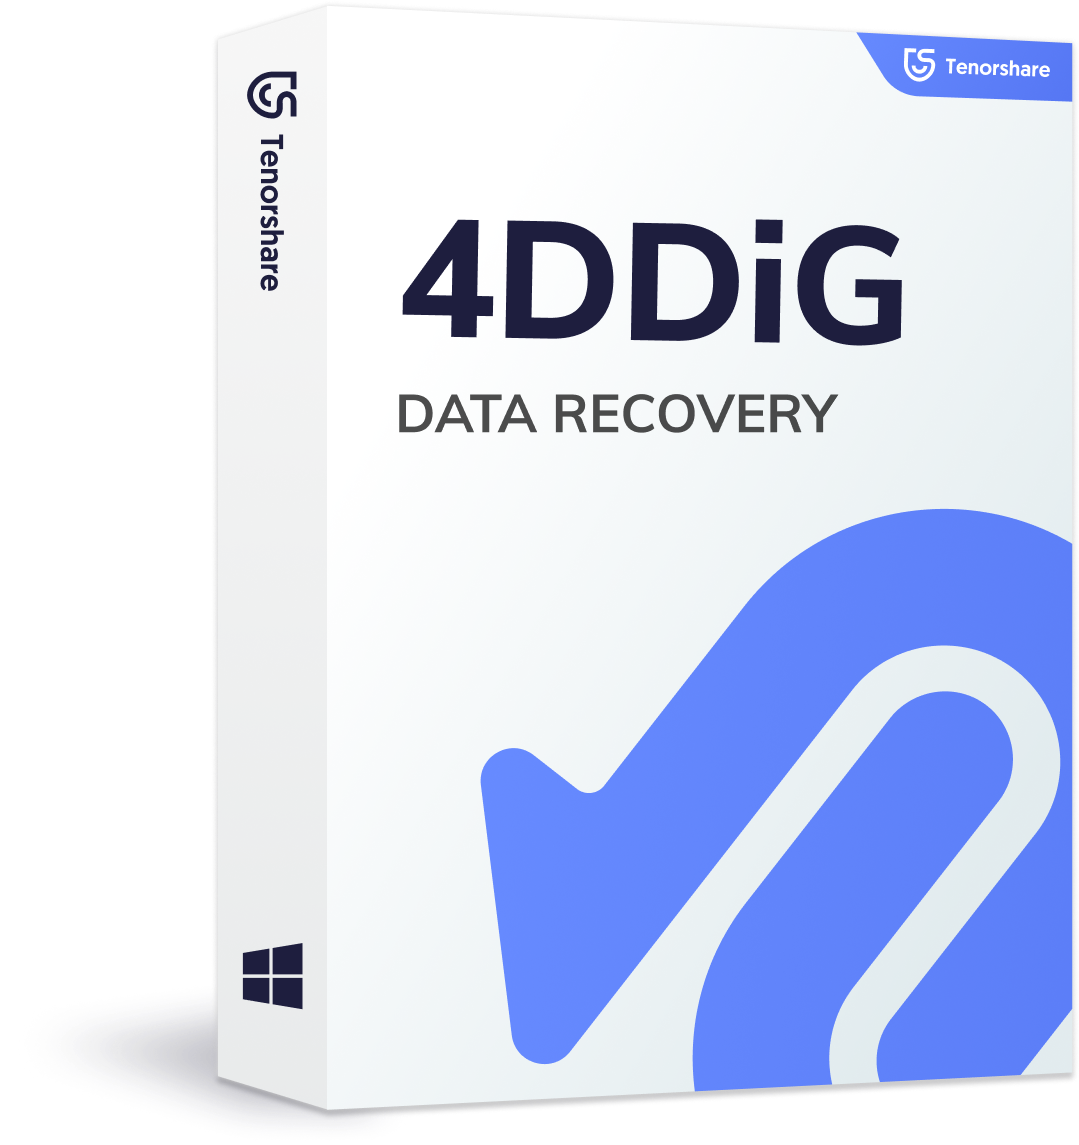 『4DDiG Windowsデータ復元』